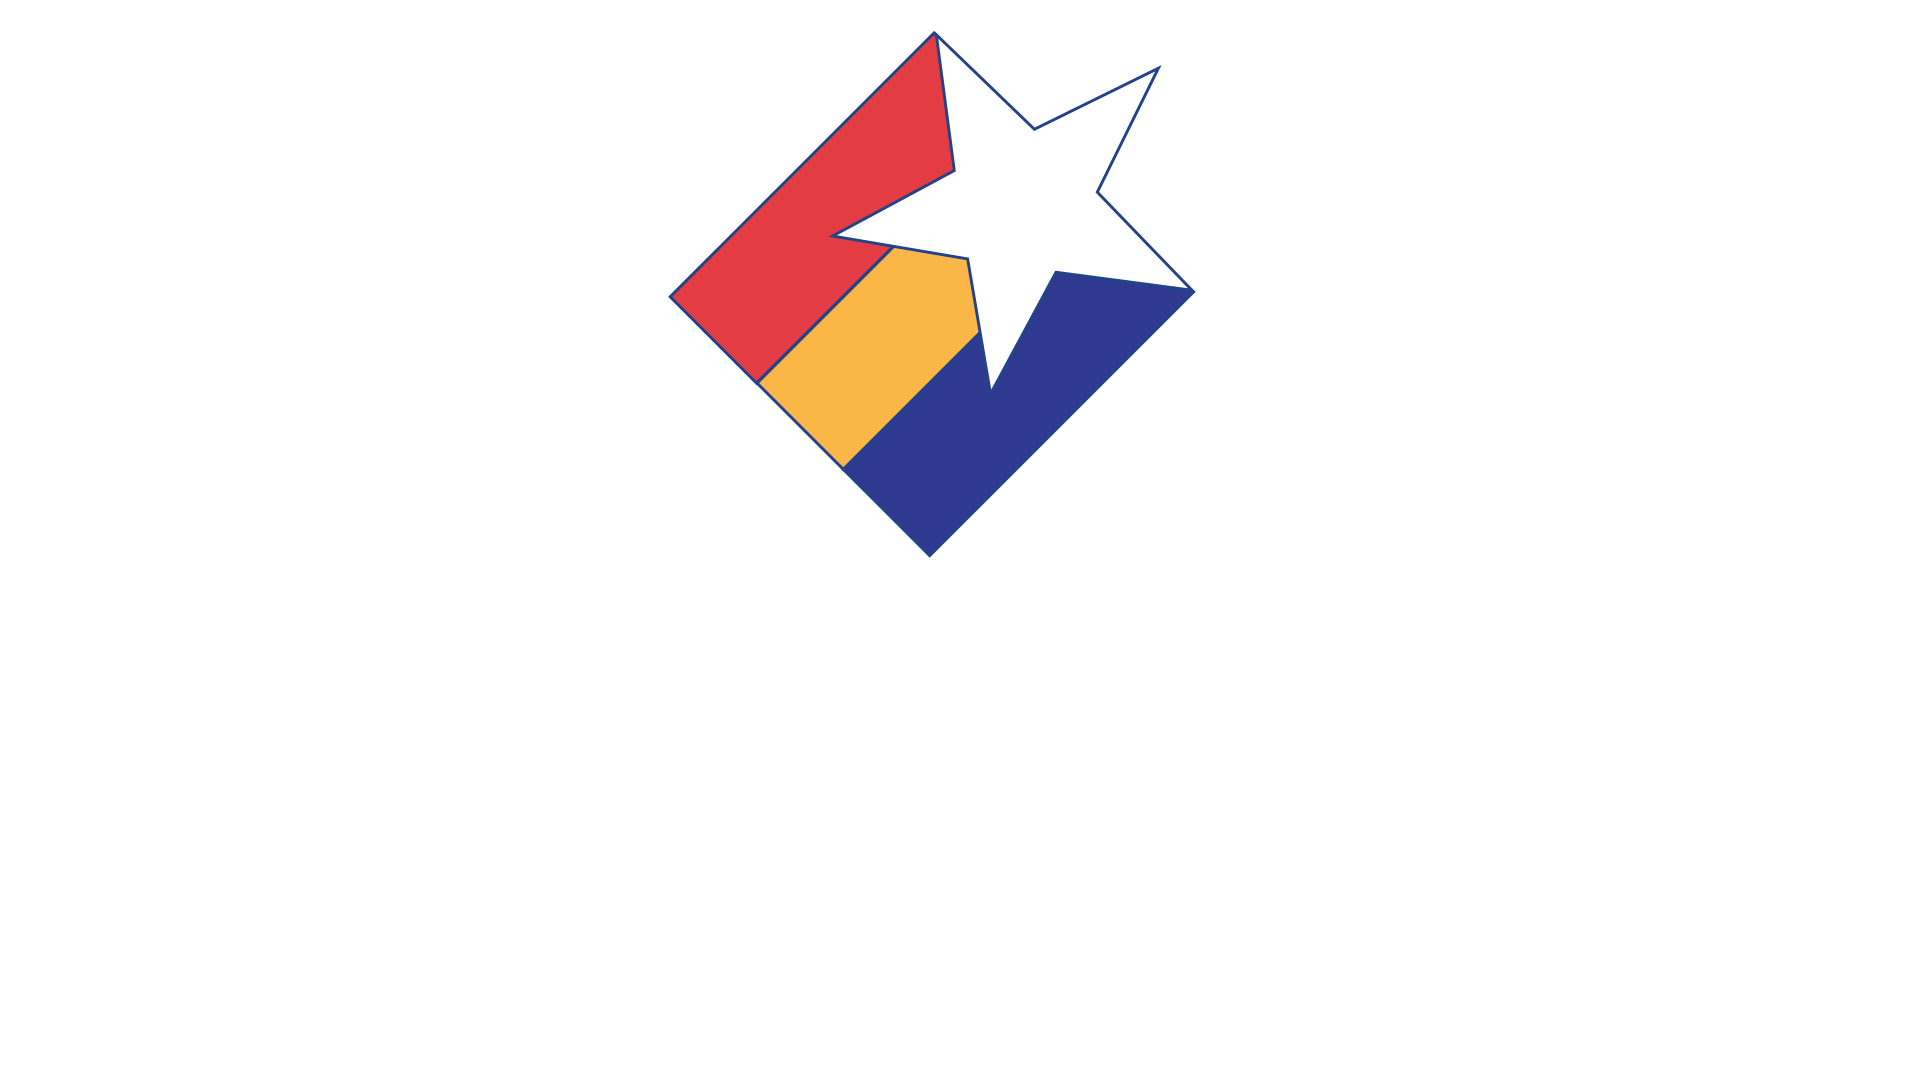 FlyAEX-logo-star-on-top-white-text